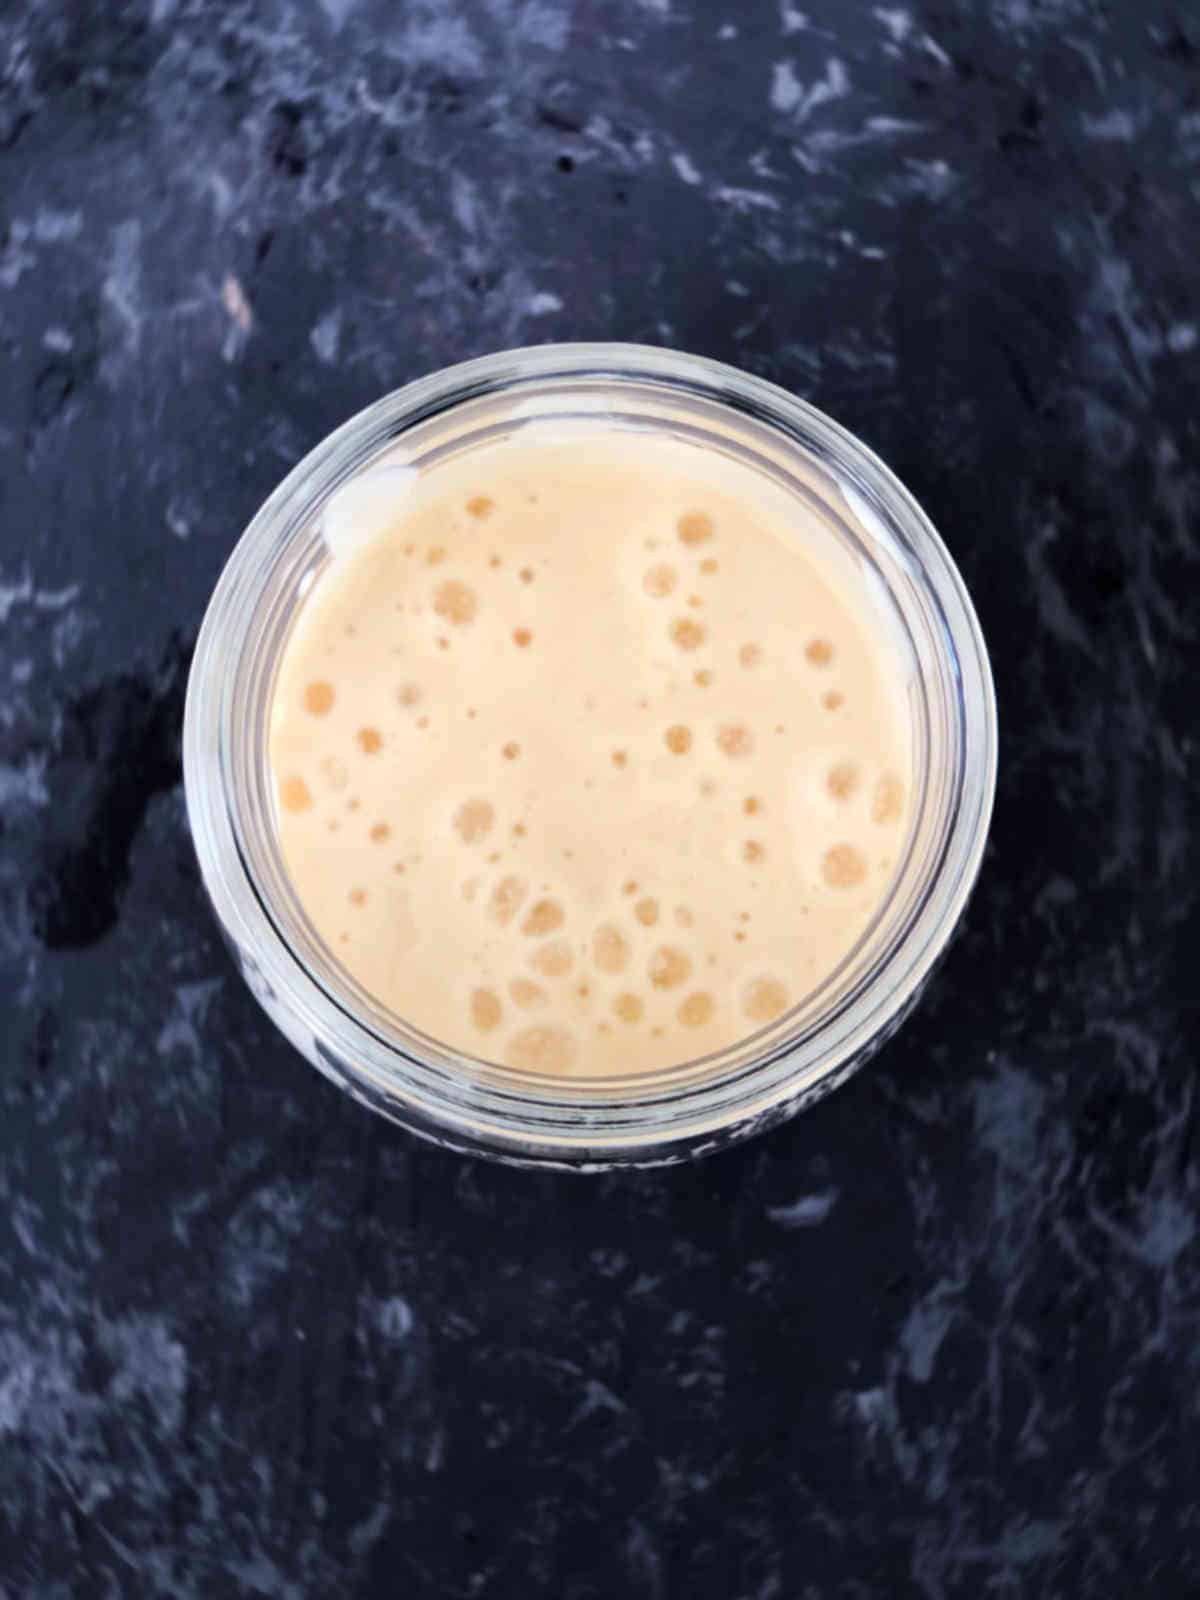 Bubbly sourdough starter in a glass jar.